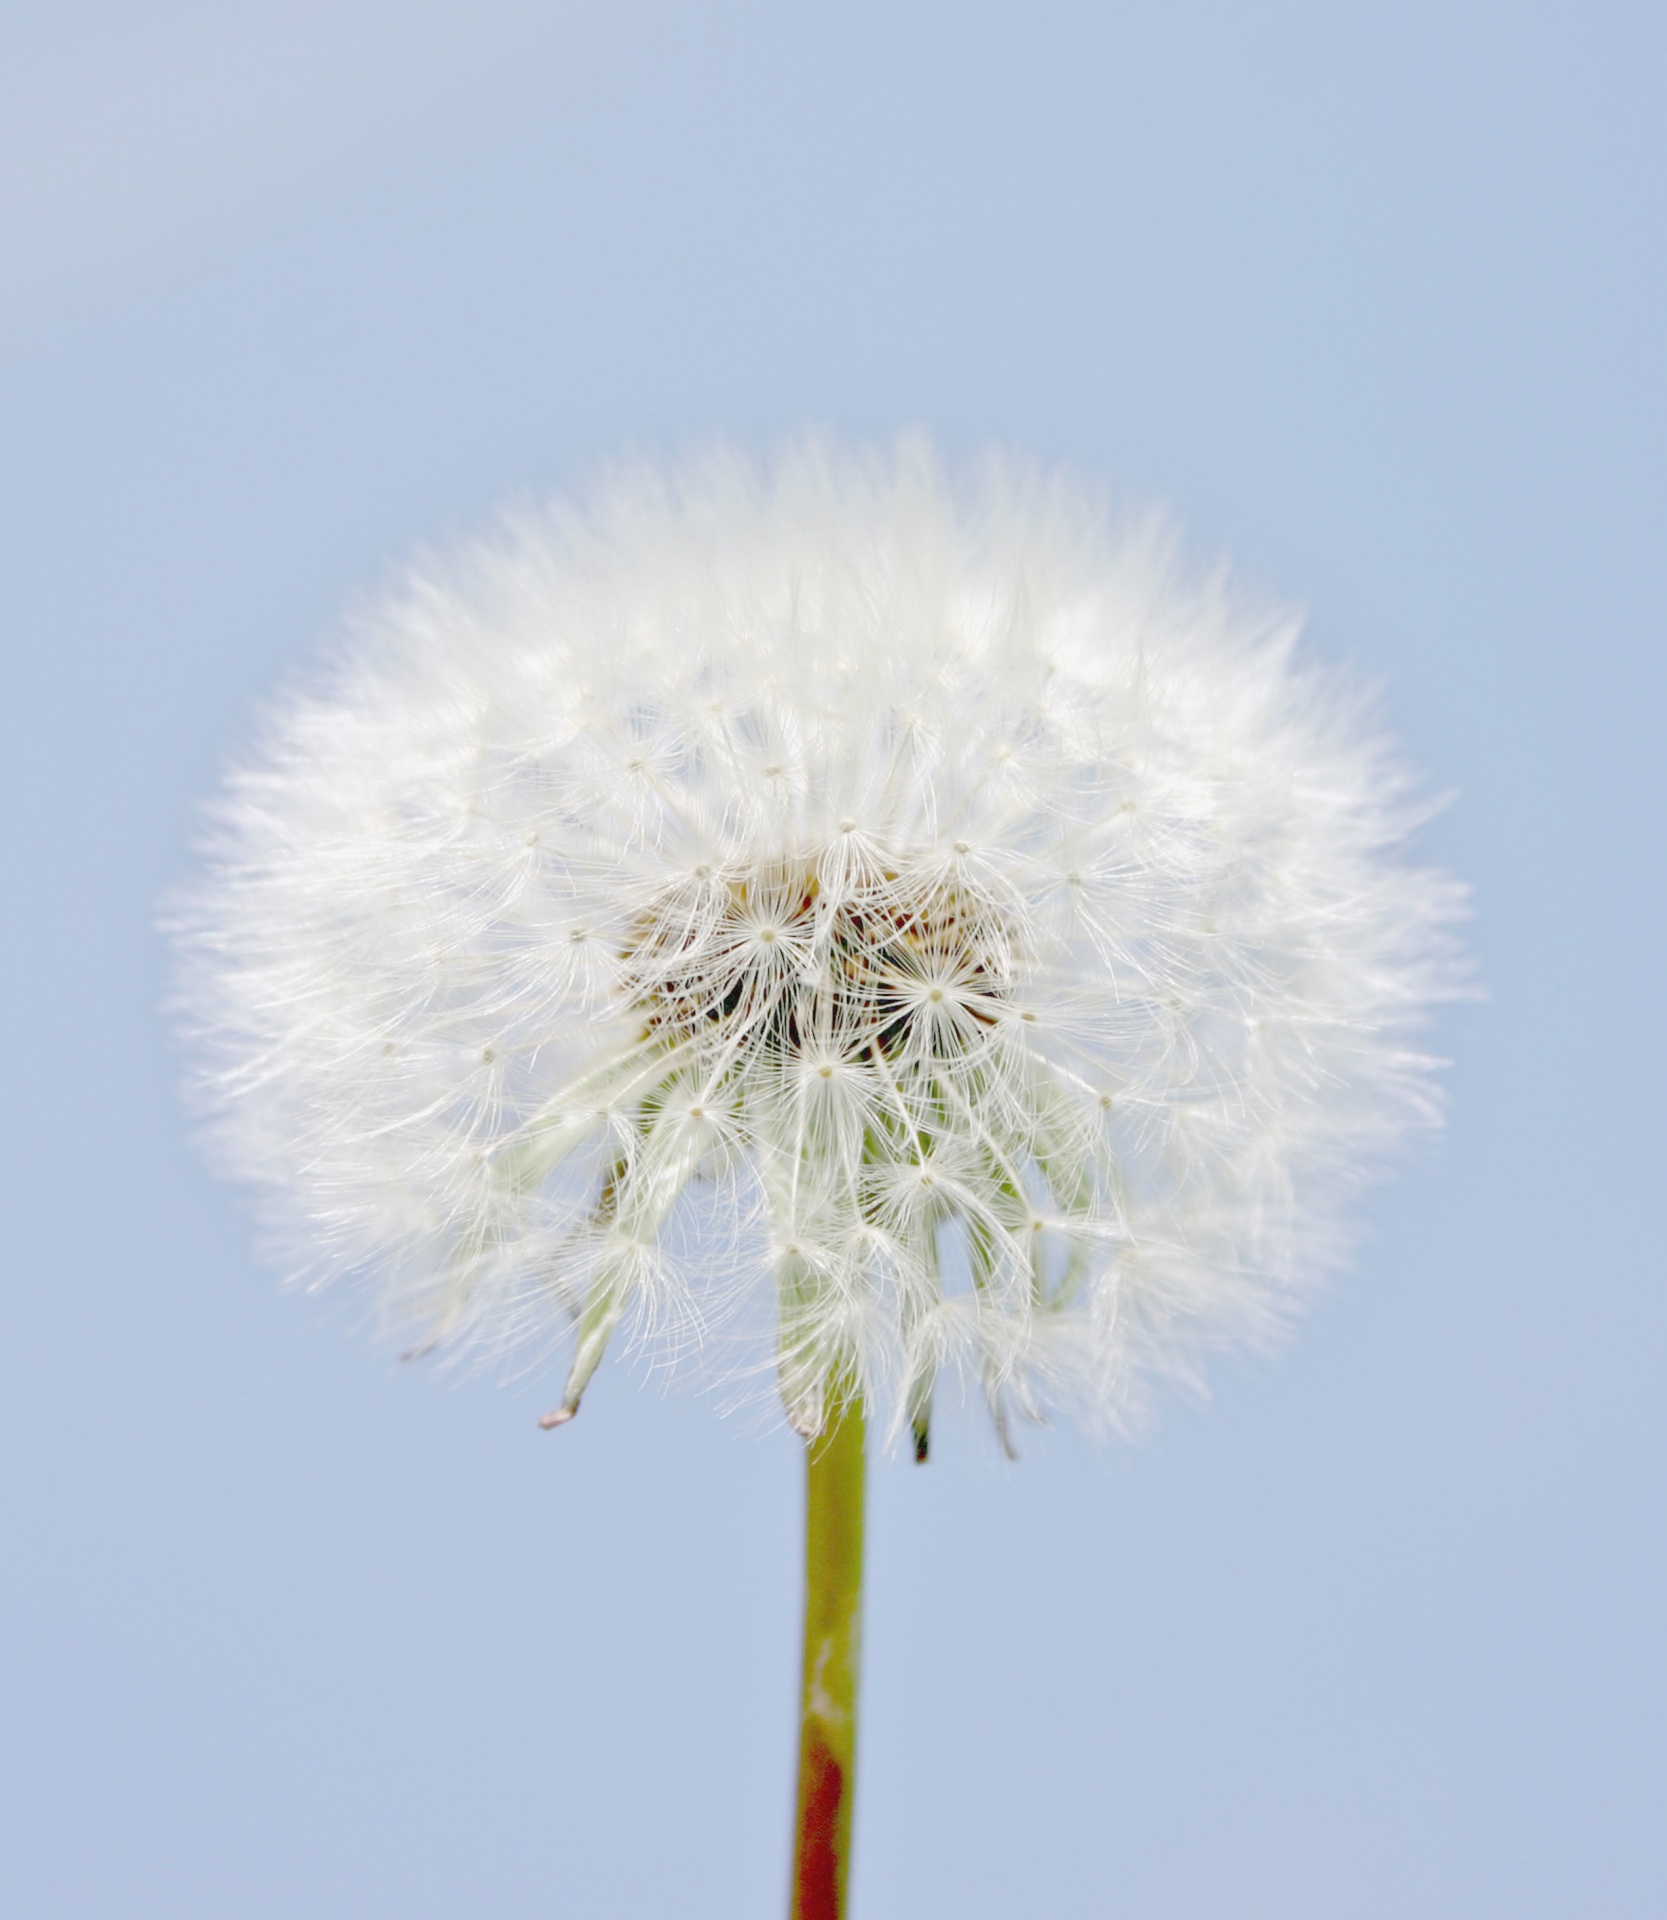 Dandelion flower seed head against blue sky background